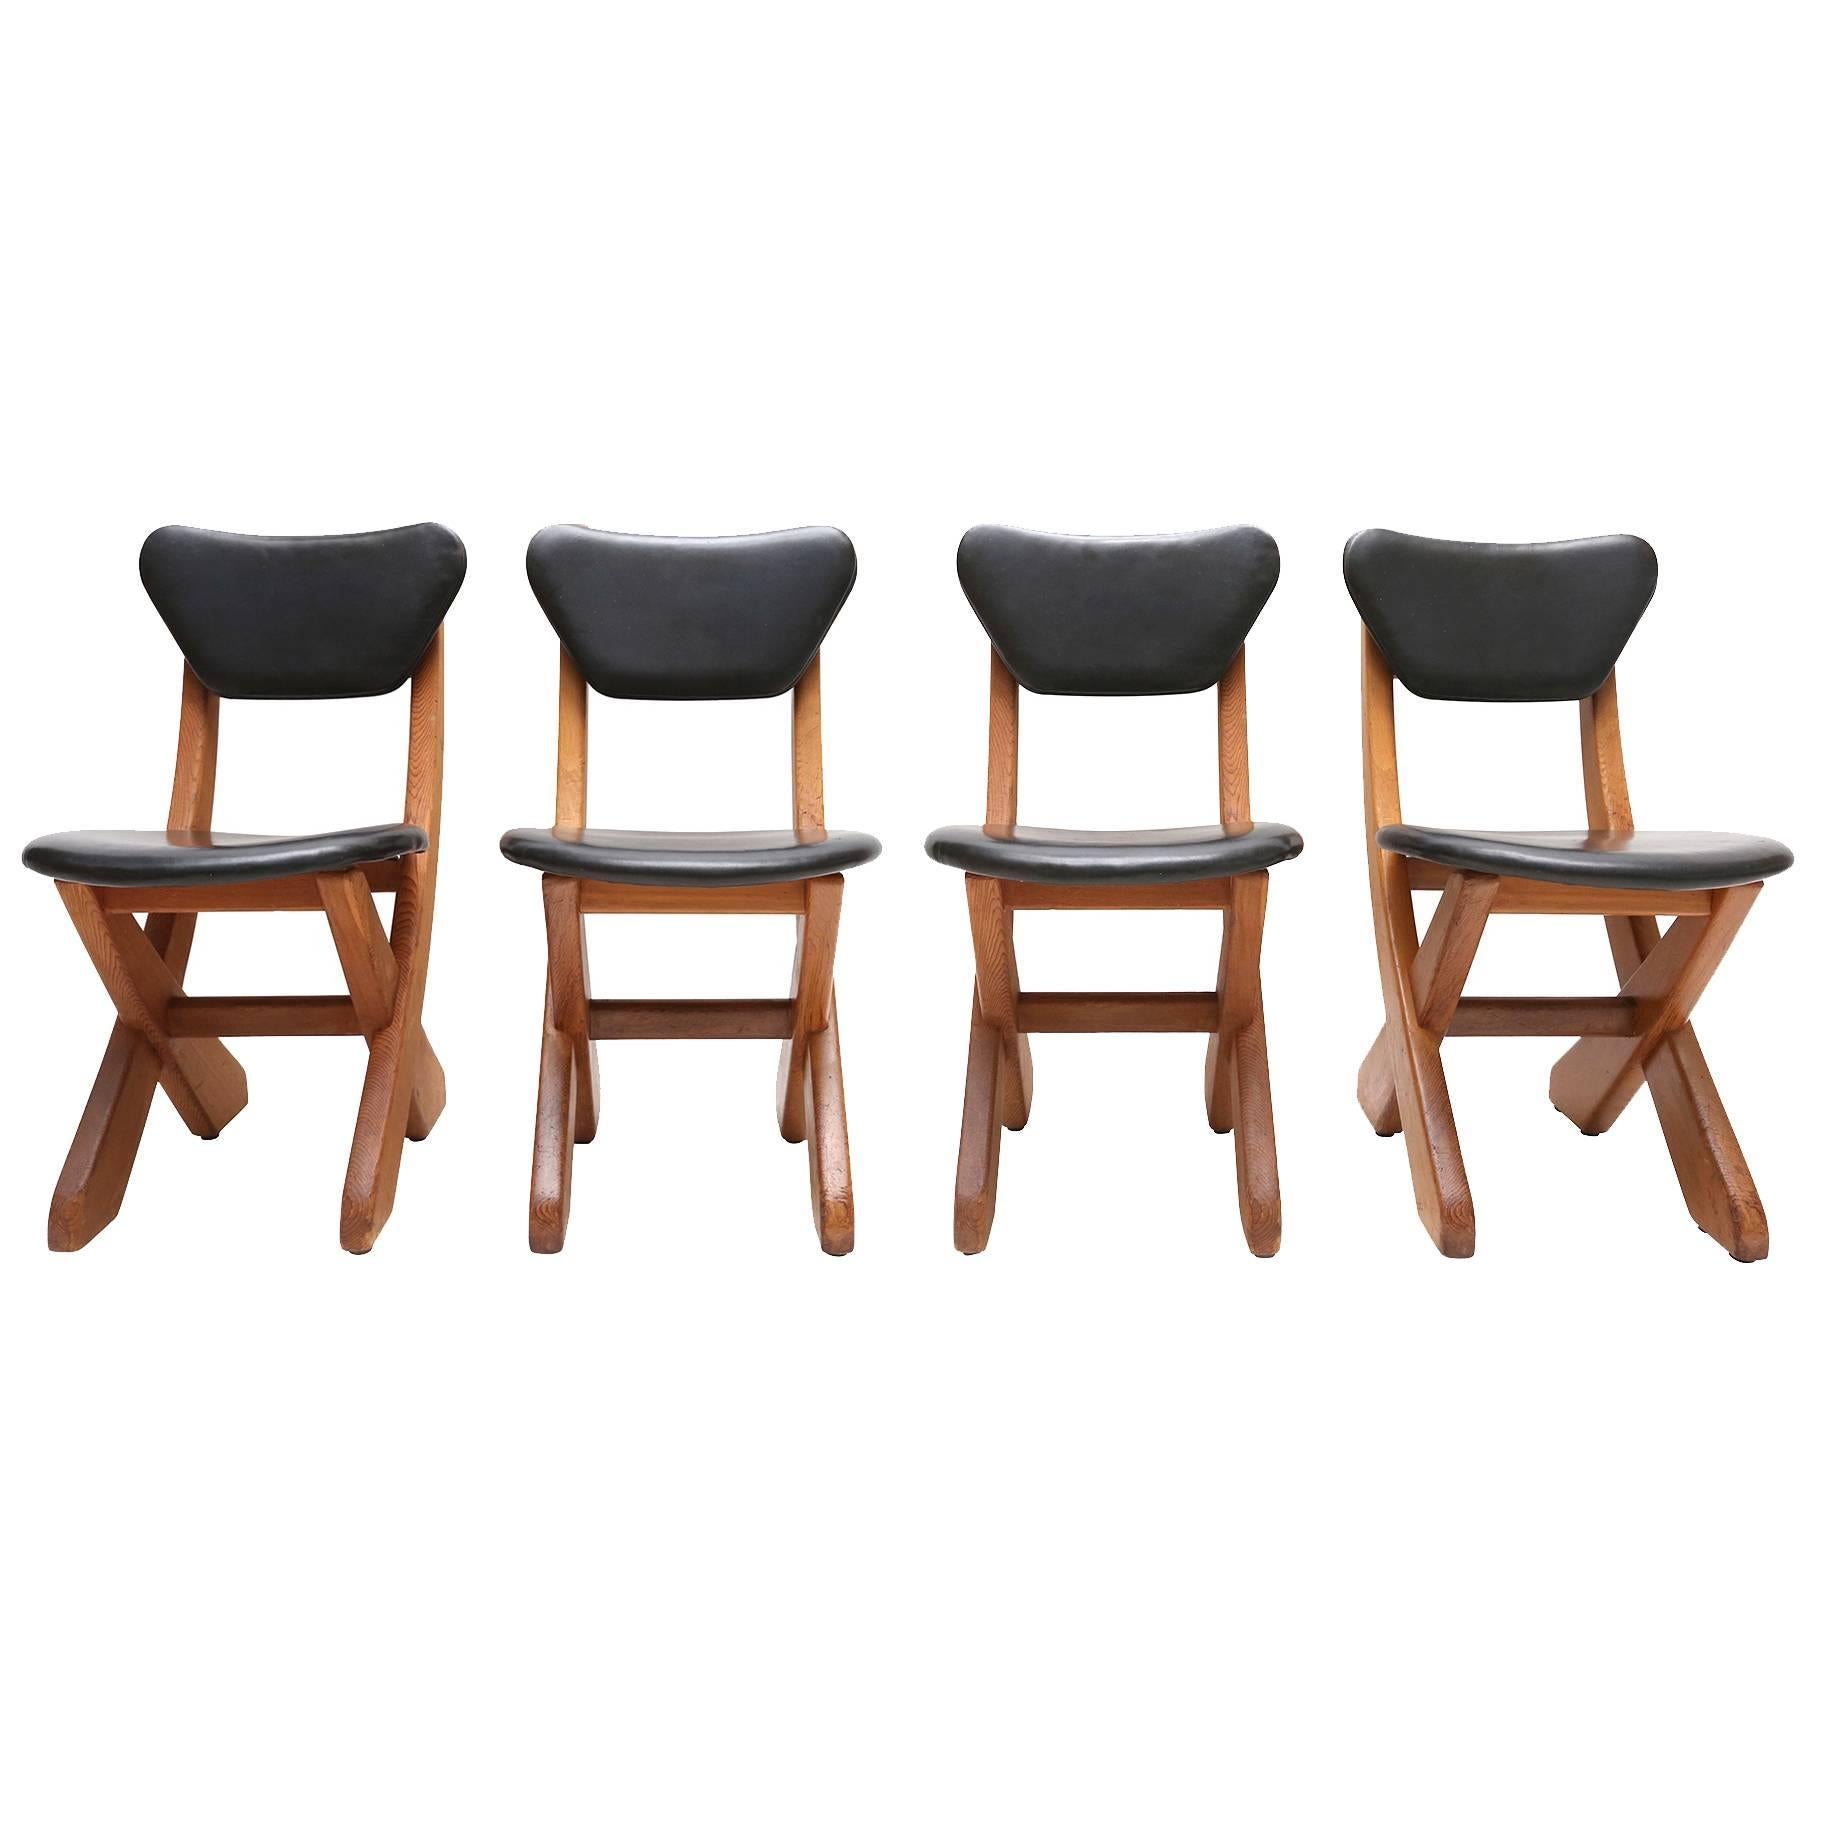 Mid-century modern Danish black Leather dining chairs 